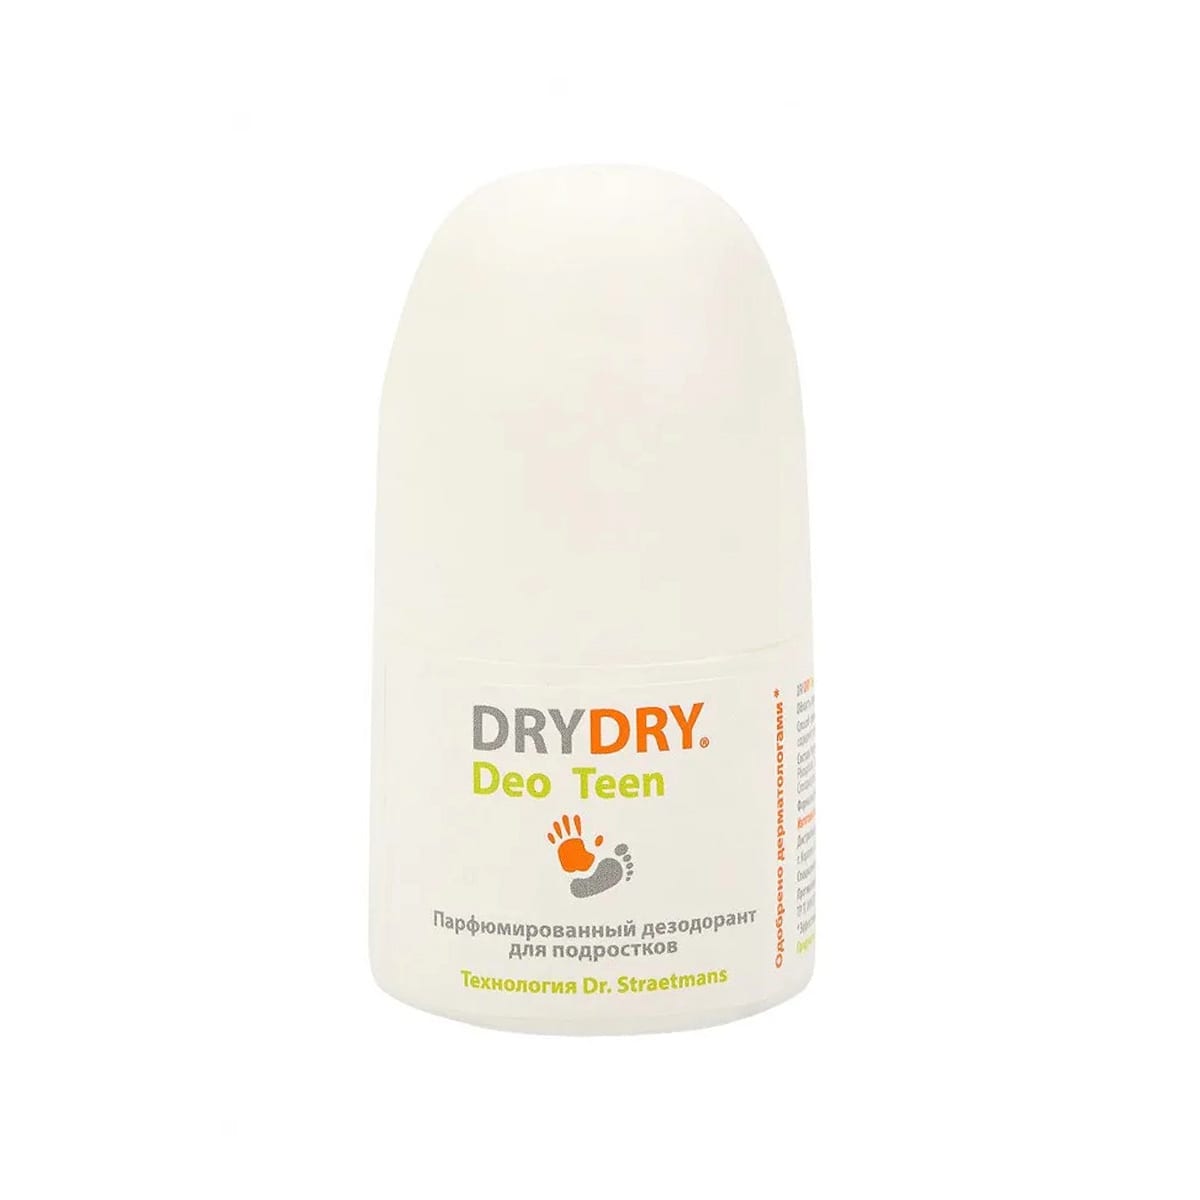 Дезодорант для подростков Dry Dry Deo Teen Roll-on, парфюмированный, 50 мл.